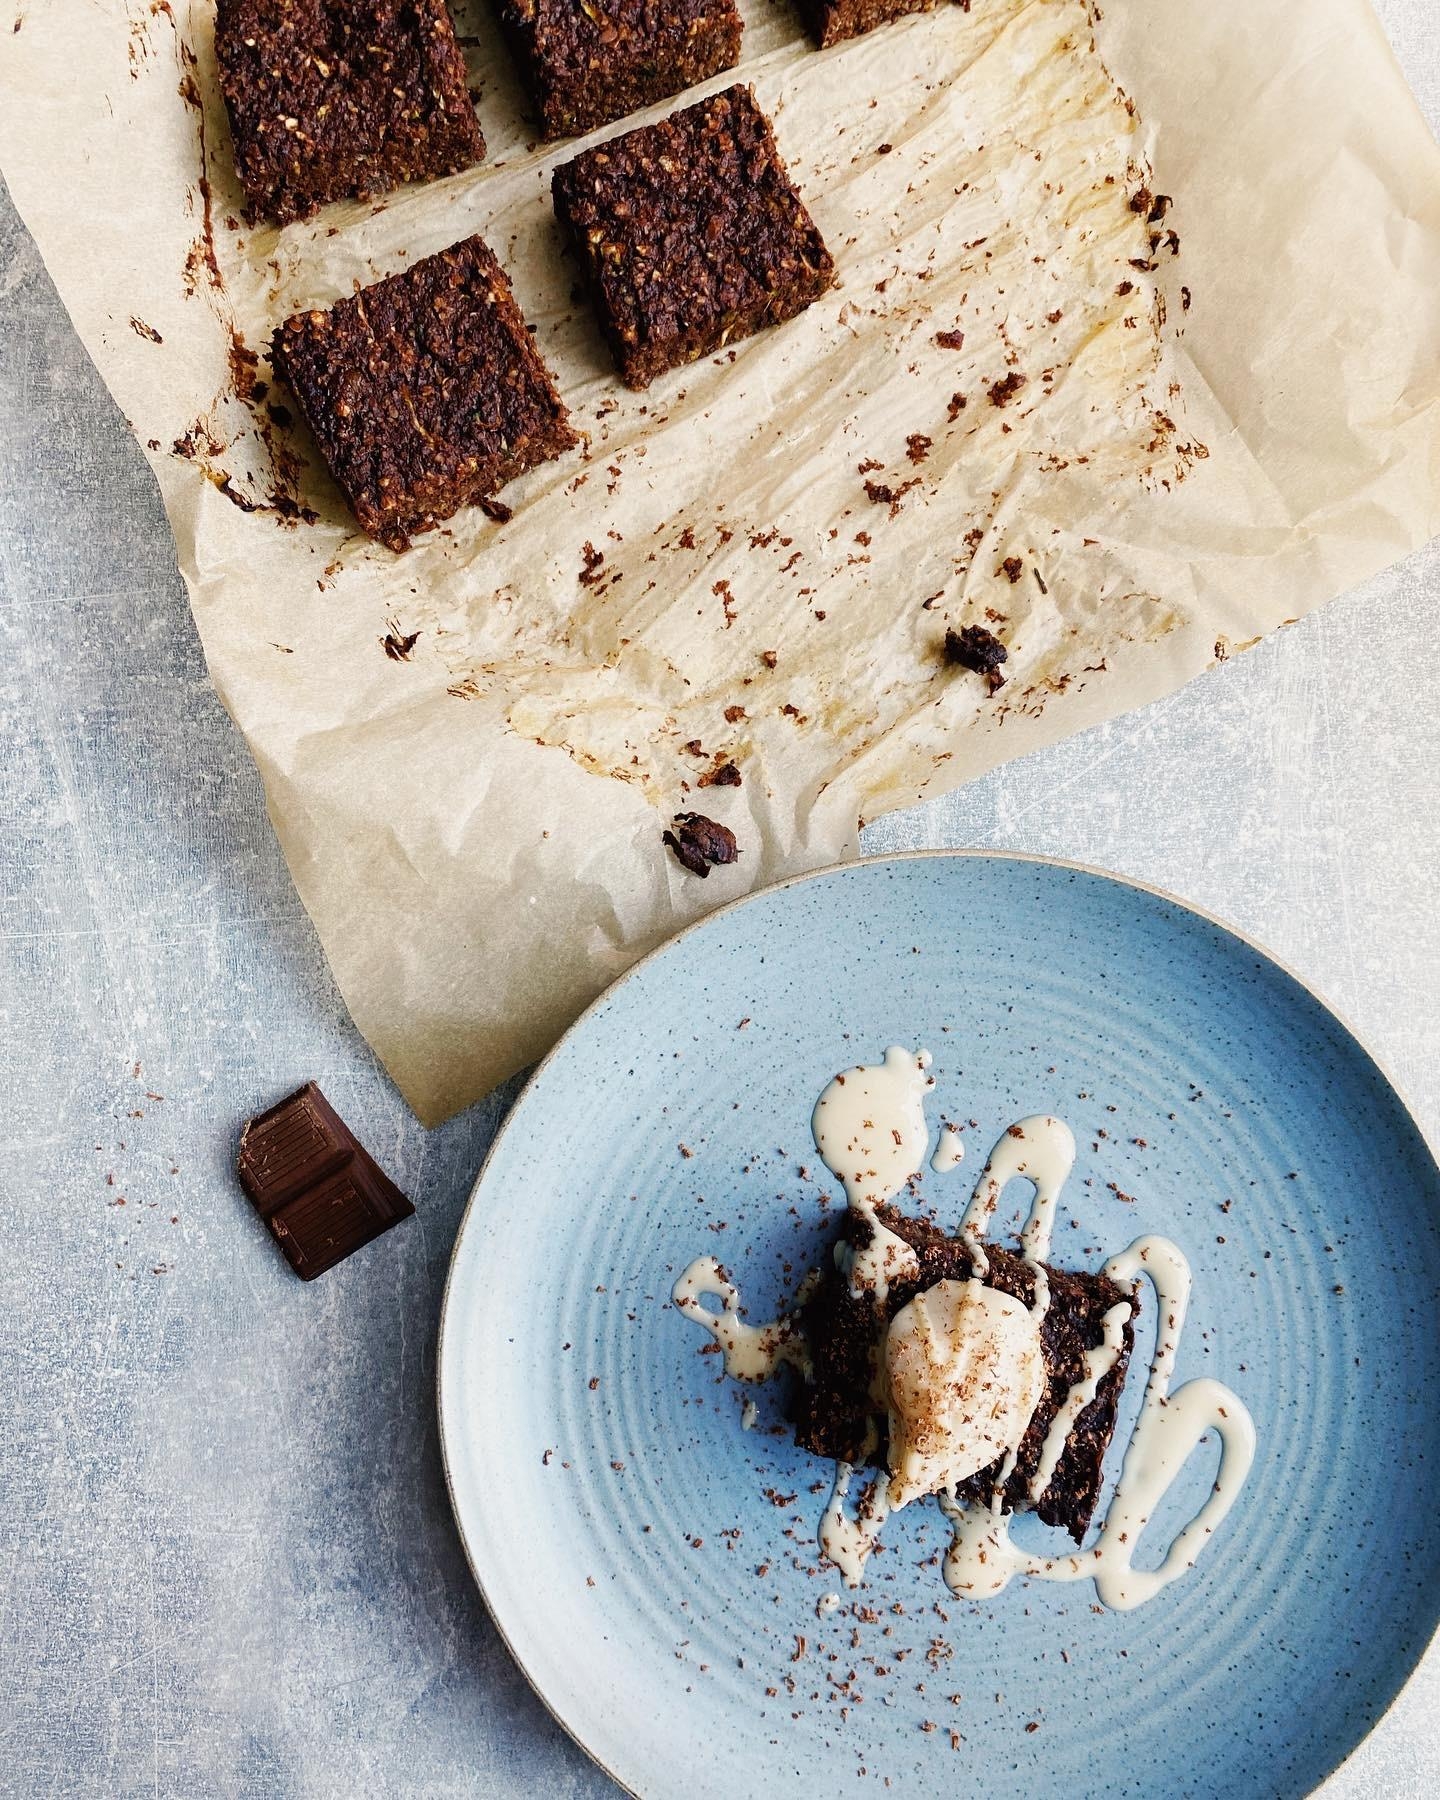 Super schokoladige #Zucchini-Brownies 😃 #vegan #lecker #dessert